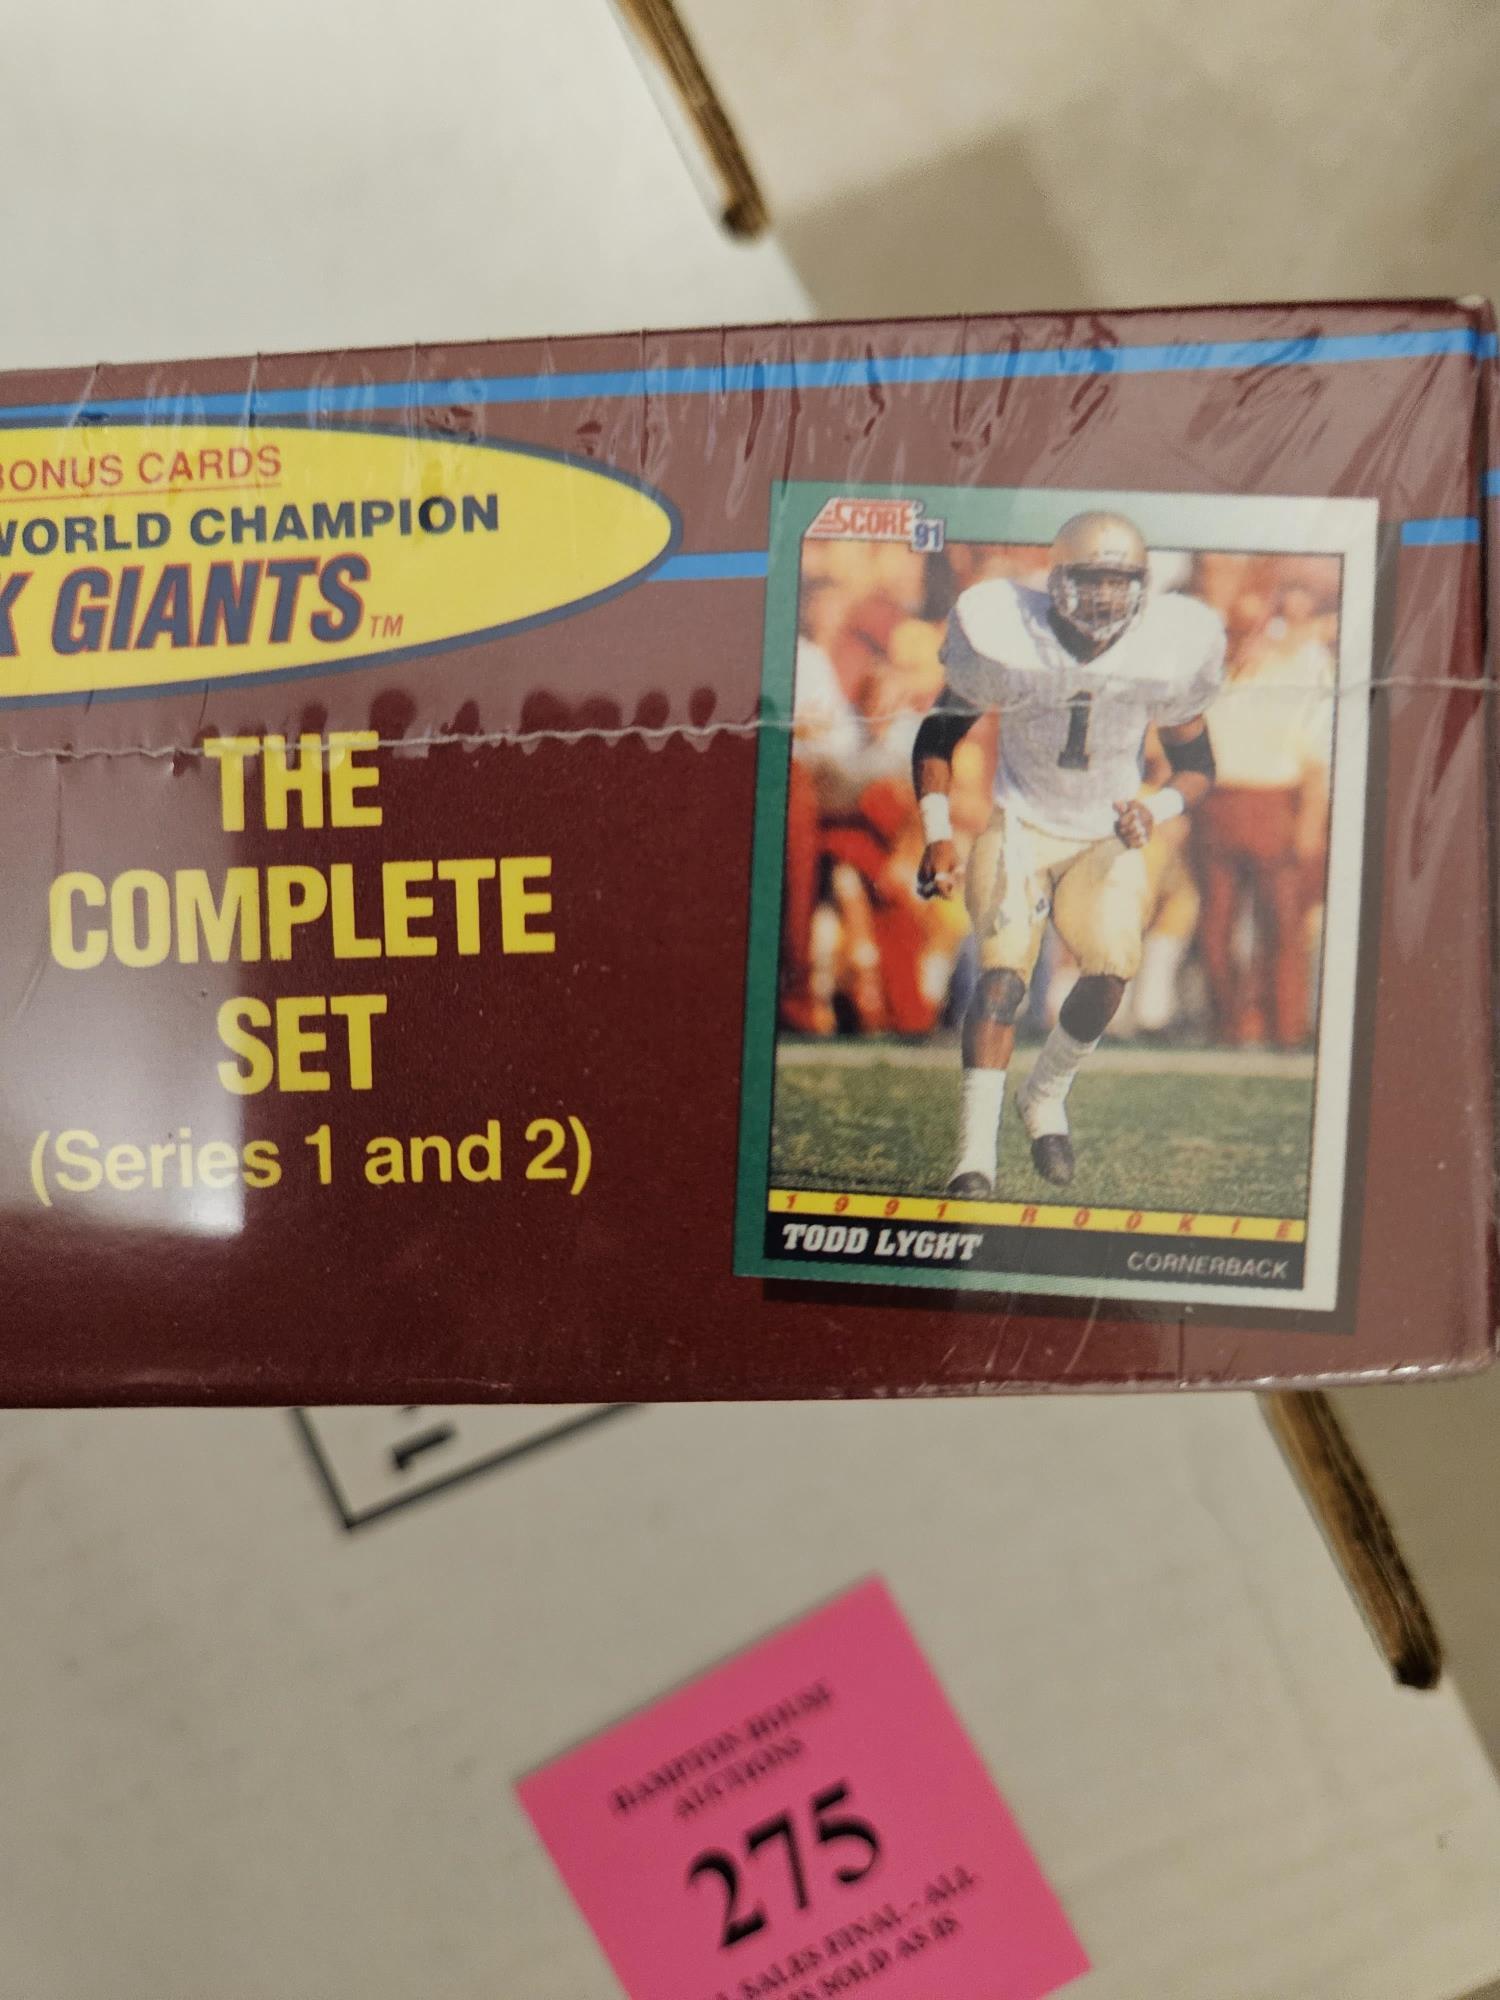 SCORE NFL 1991 SEALED BOX OF TRADING CARDS